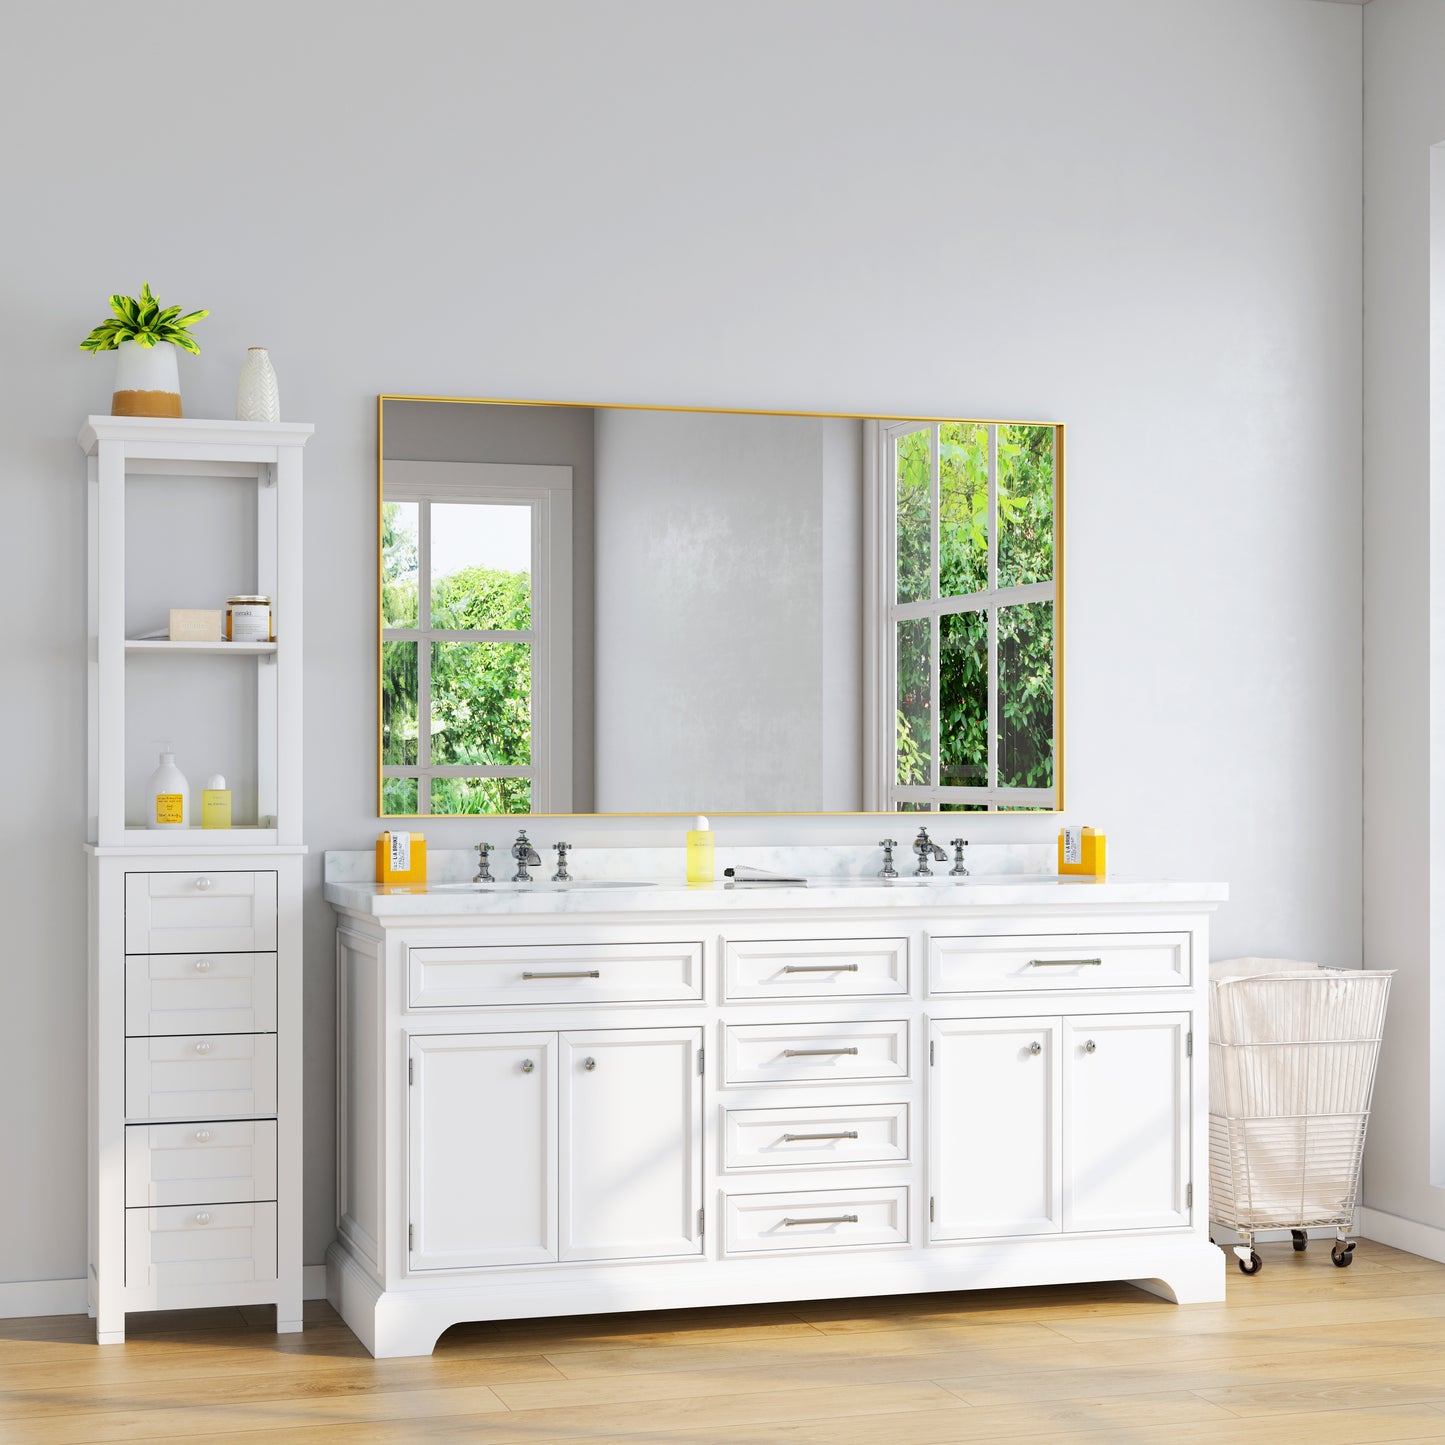 Waterpar® 55 in. W x 30 in. H Rectangular Aluminum Framed Wall Bathroom Vanity Mirror